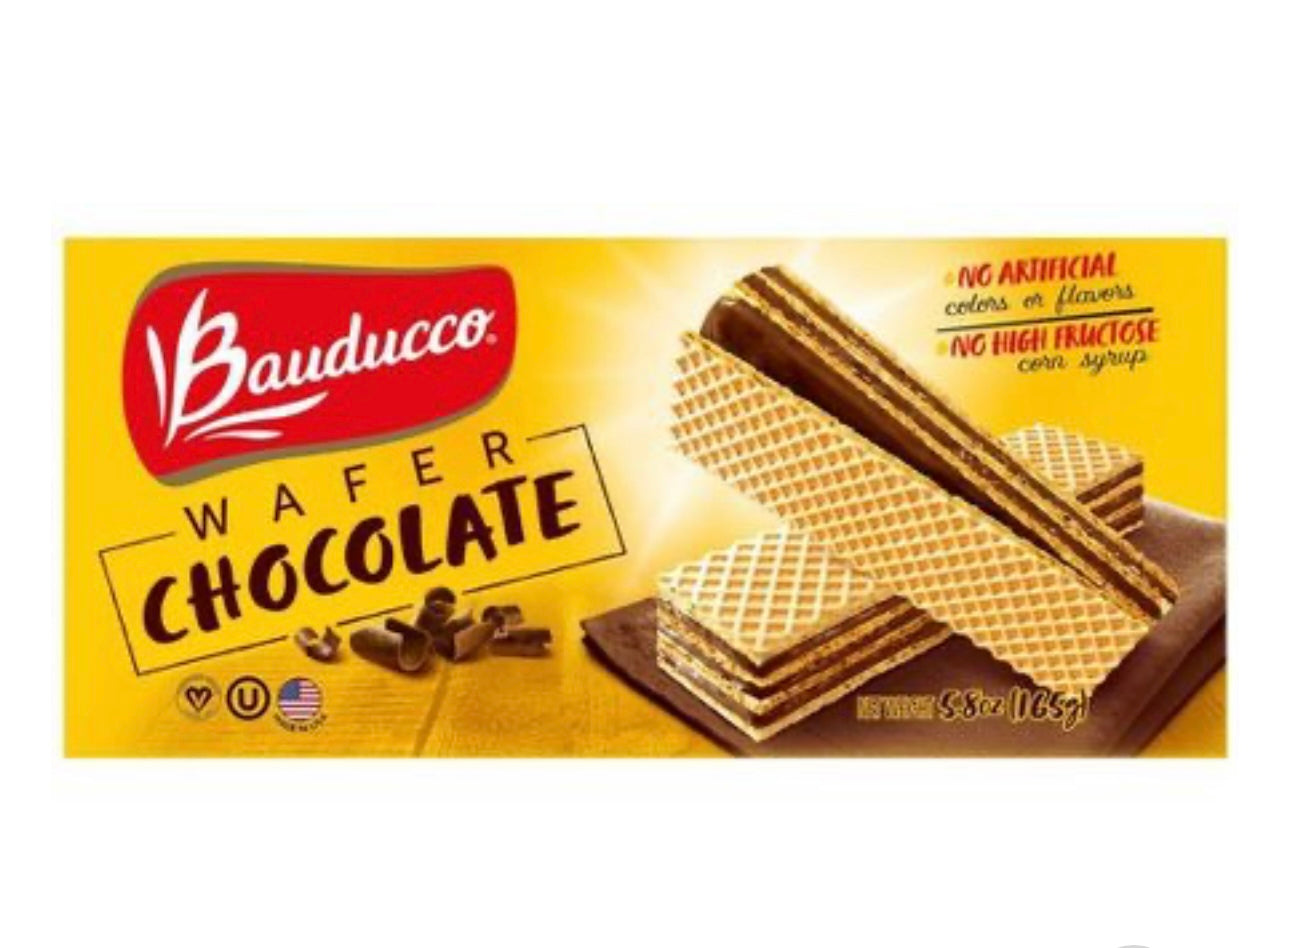 Bauducco Chocolate Wafers - 5.82oz